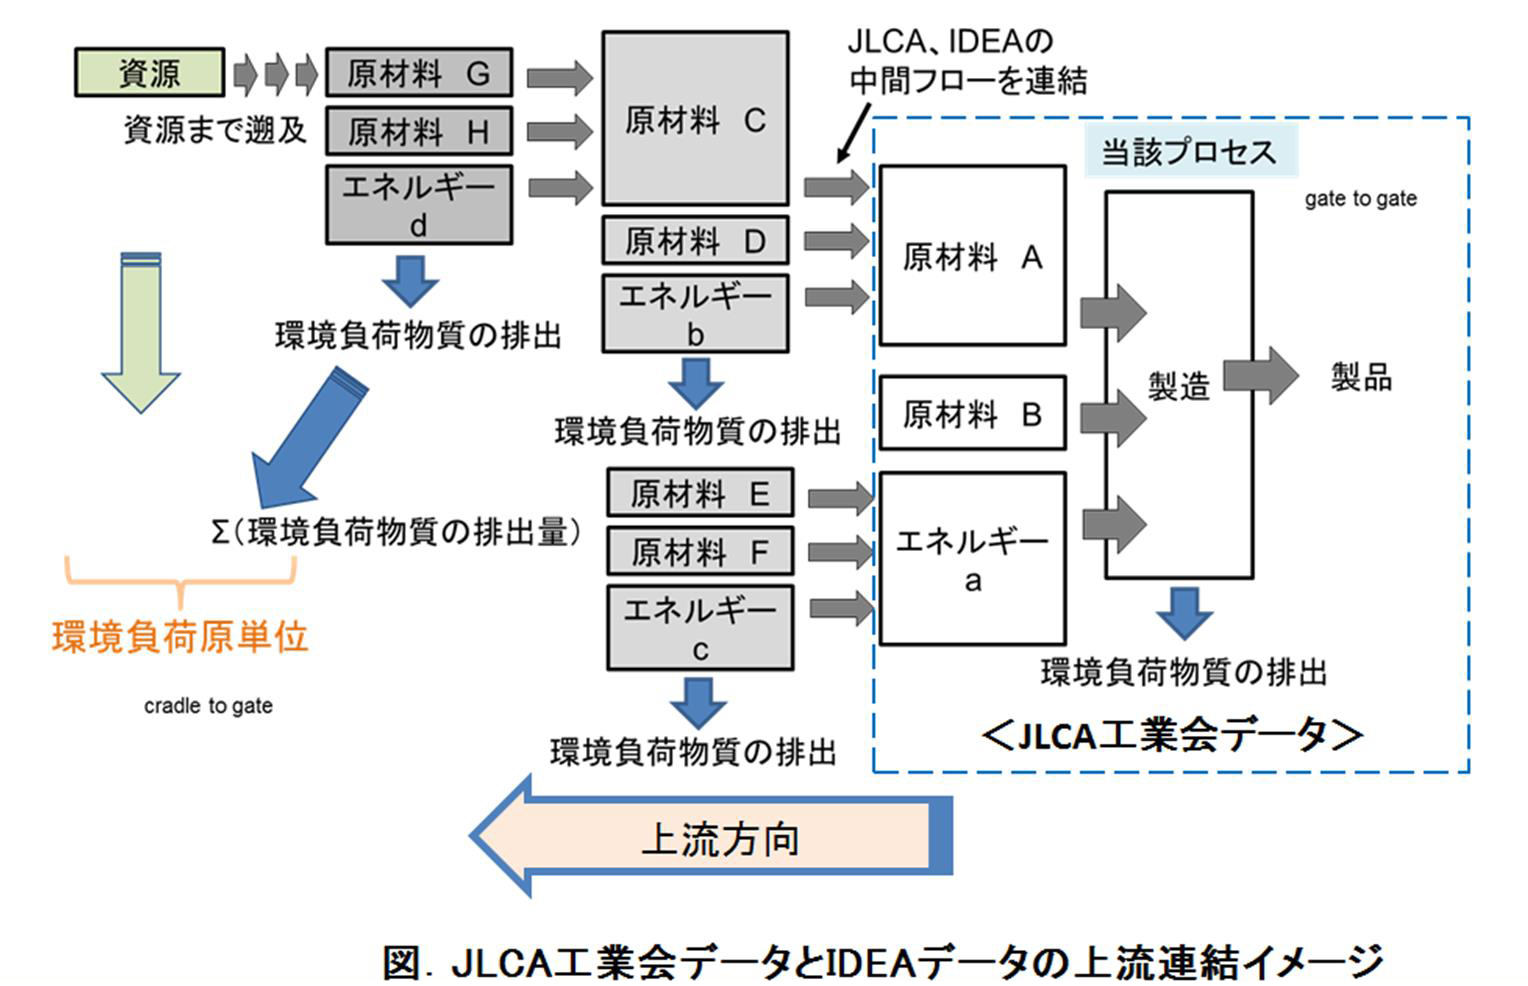 JLCA工業会データとIDEAデータの上流連結イメージ